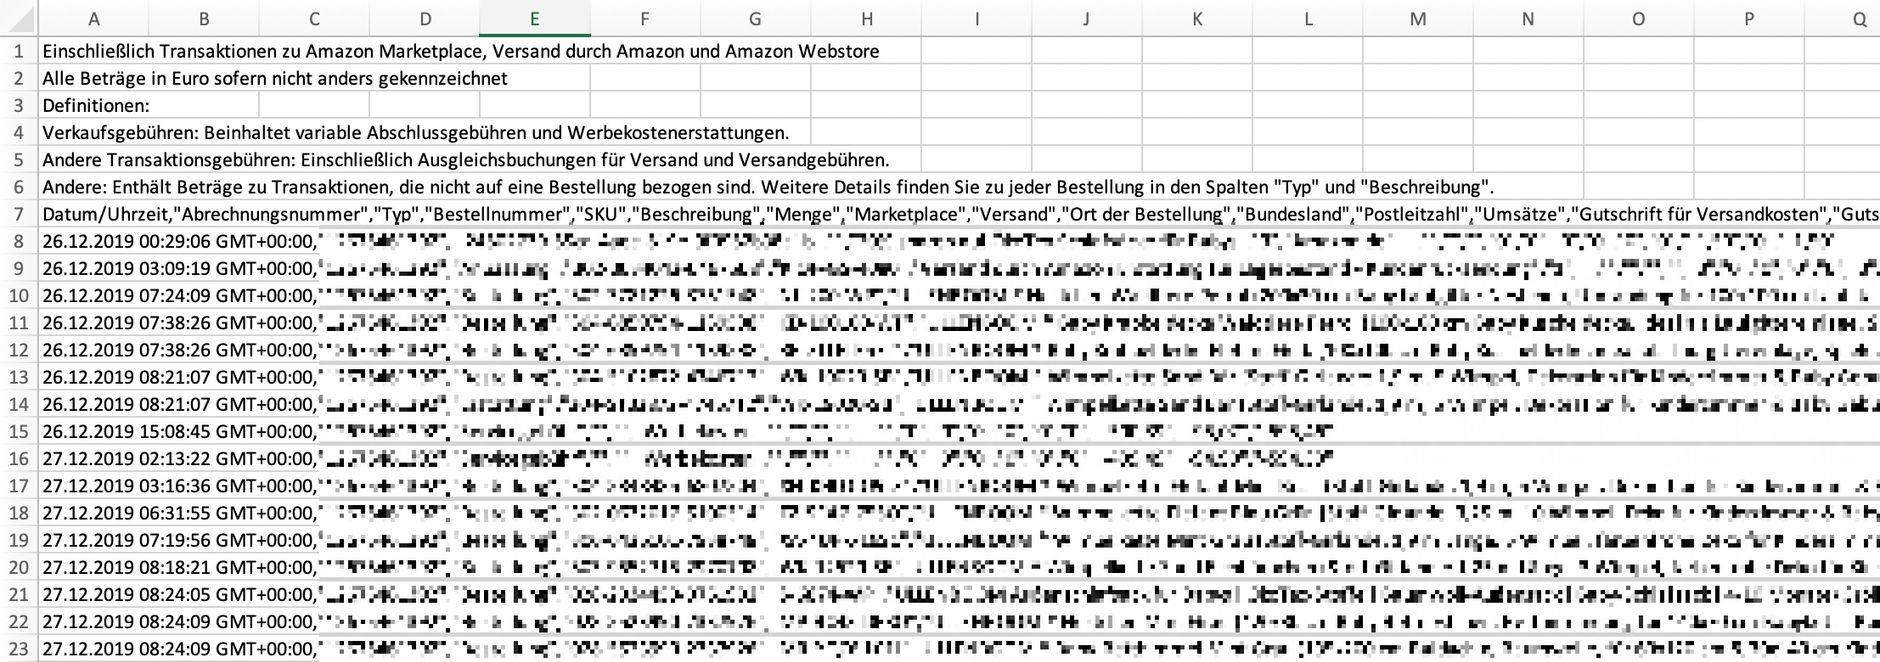 Amazon Transaktionsbericht in Excel im Rohformat